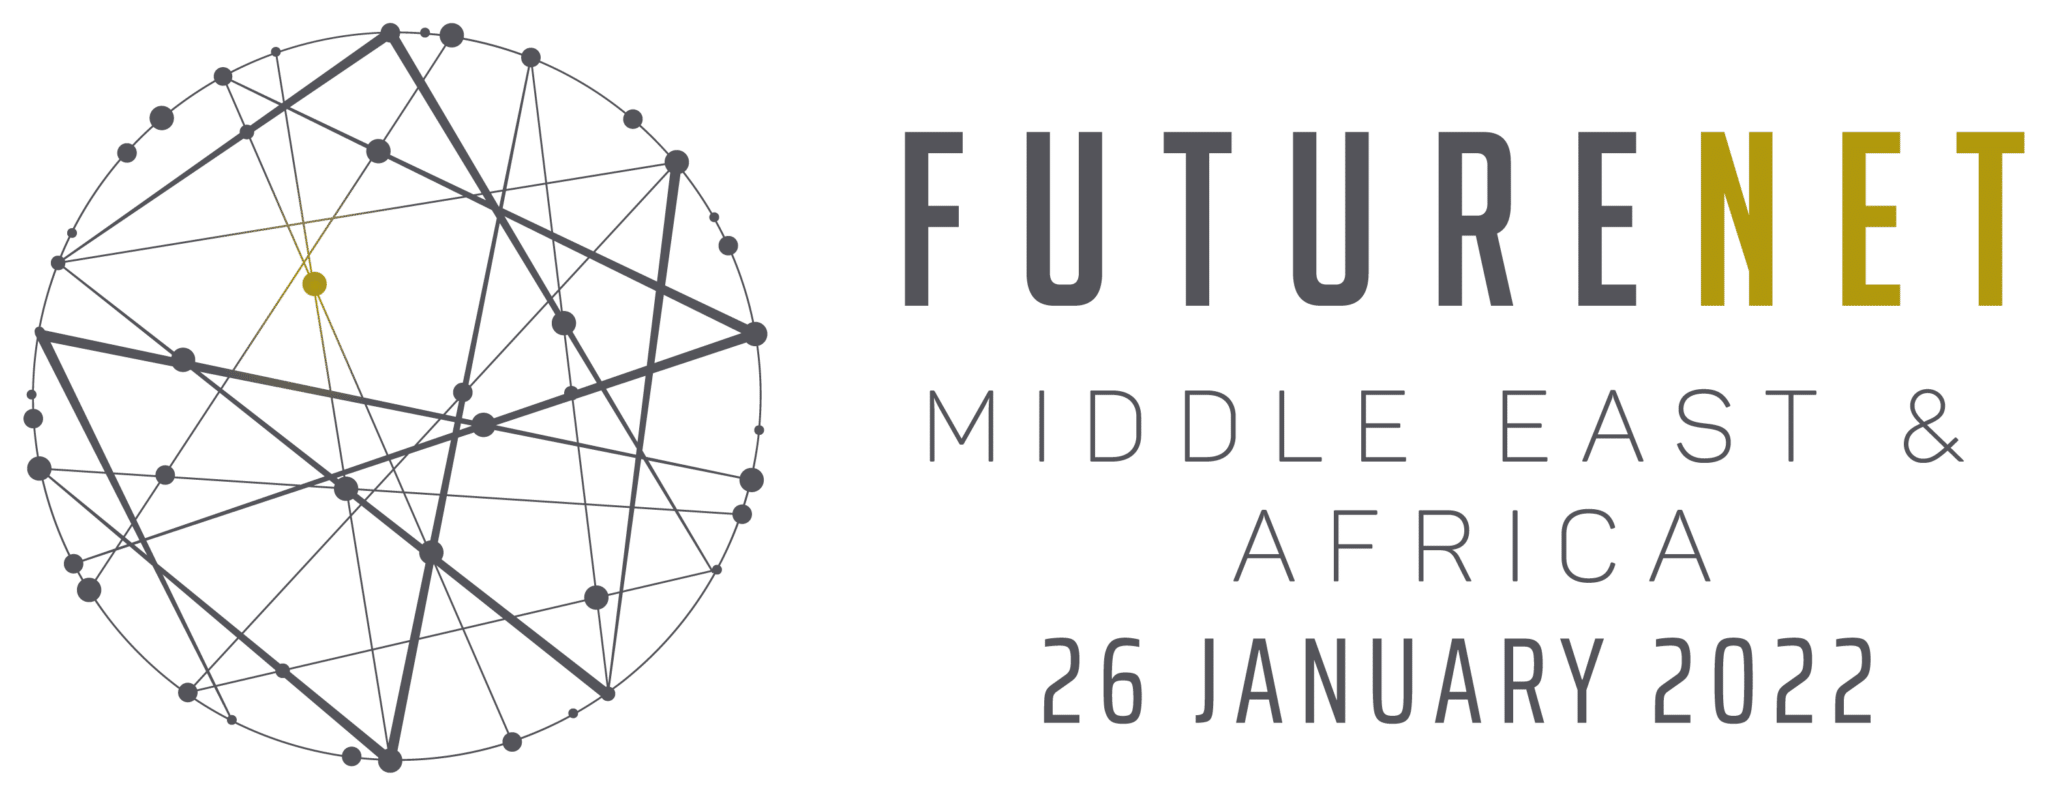 FutureNet Middle East & Africa